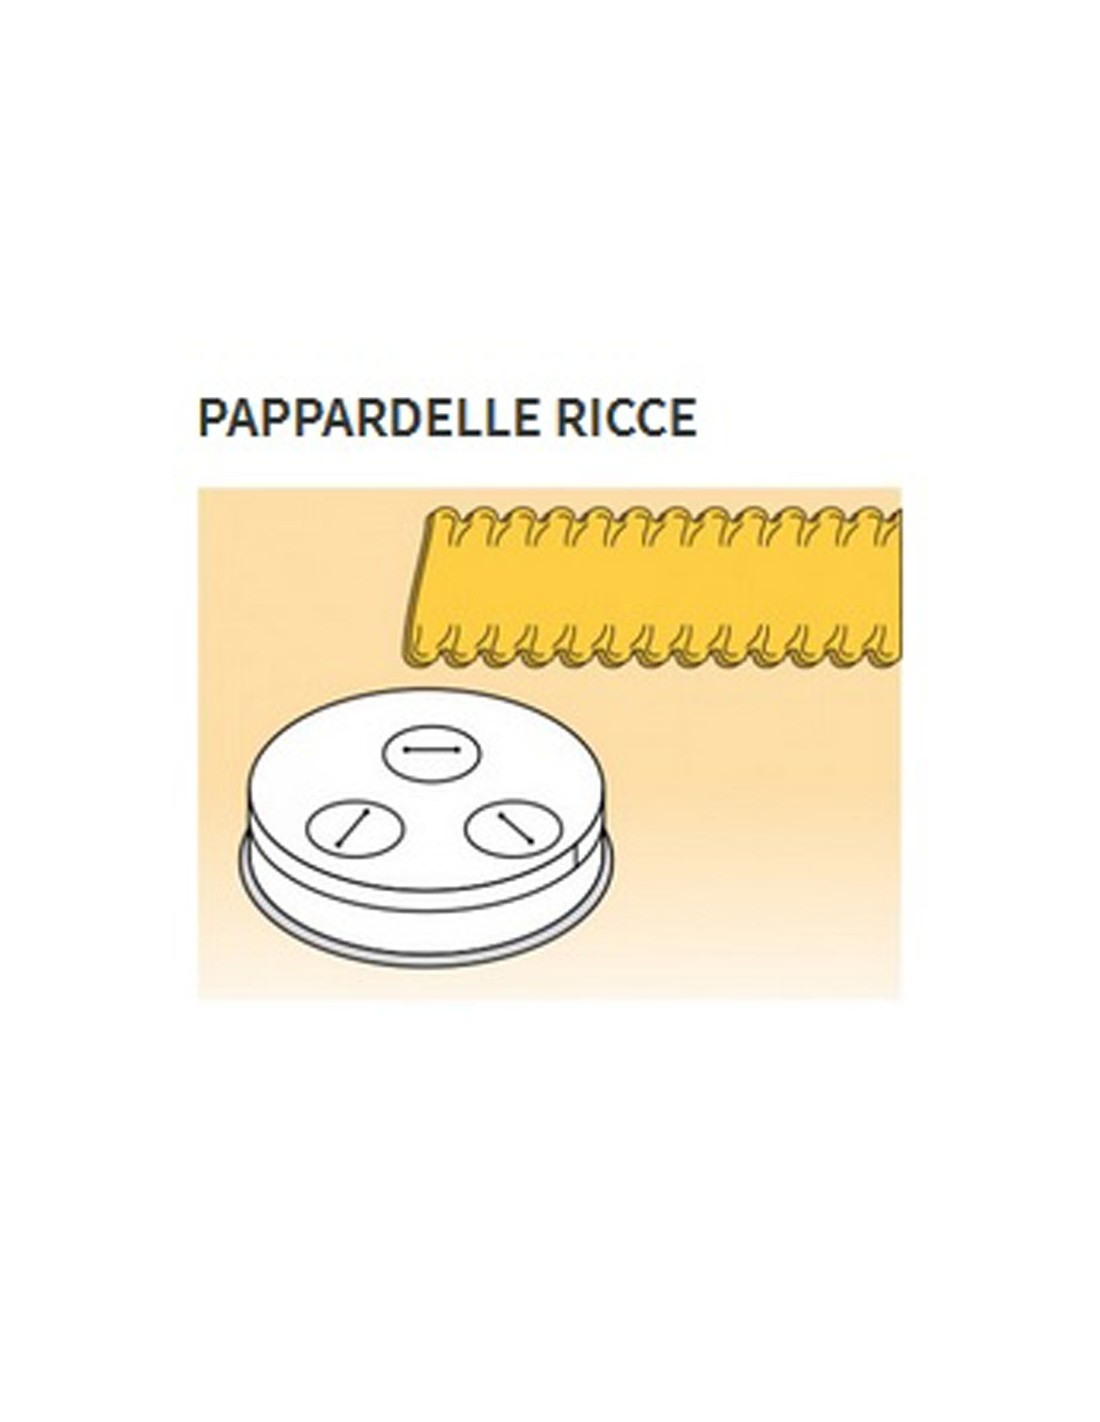 Matrices de aleación de latón de varias formas - Bronce - Para máquina de pasta fresca modelo MPF8N - Pappardelle ricce mm 16